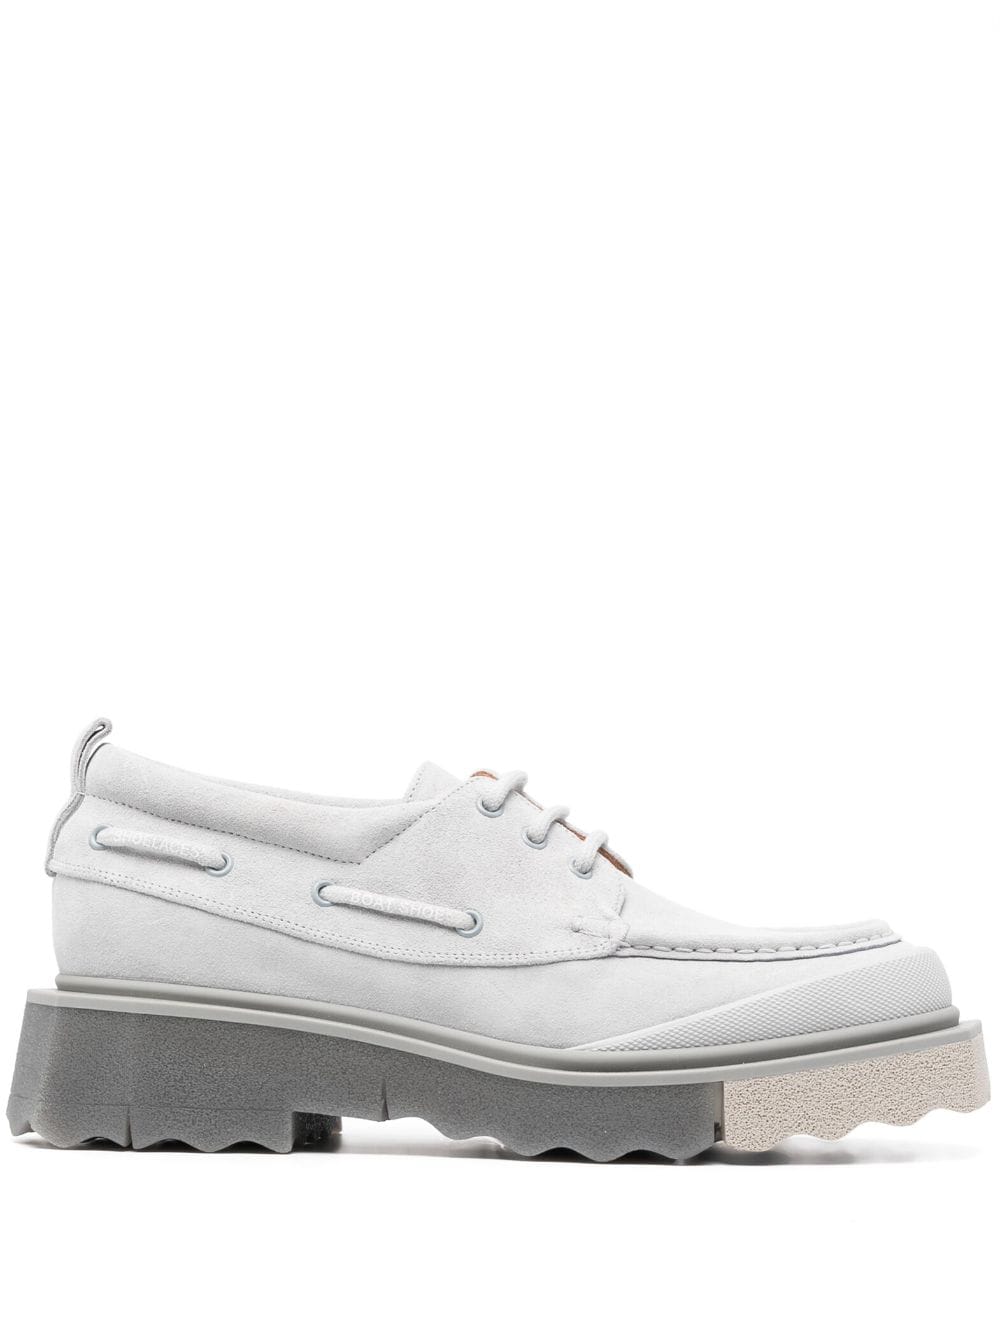 Off-White suede boat shoes - Grau von Off-White